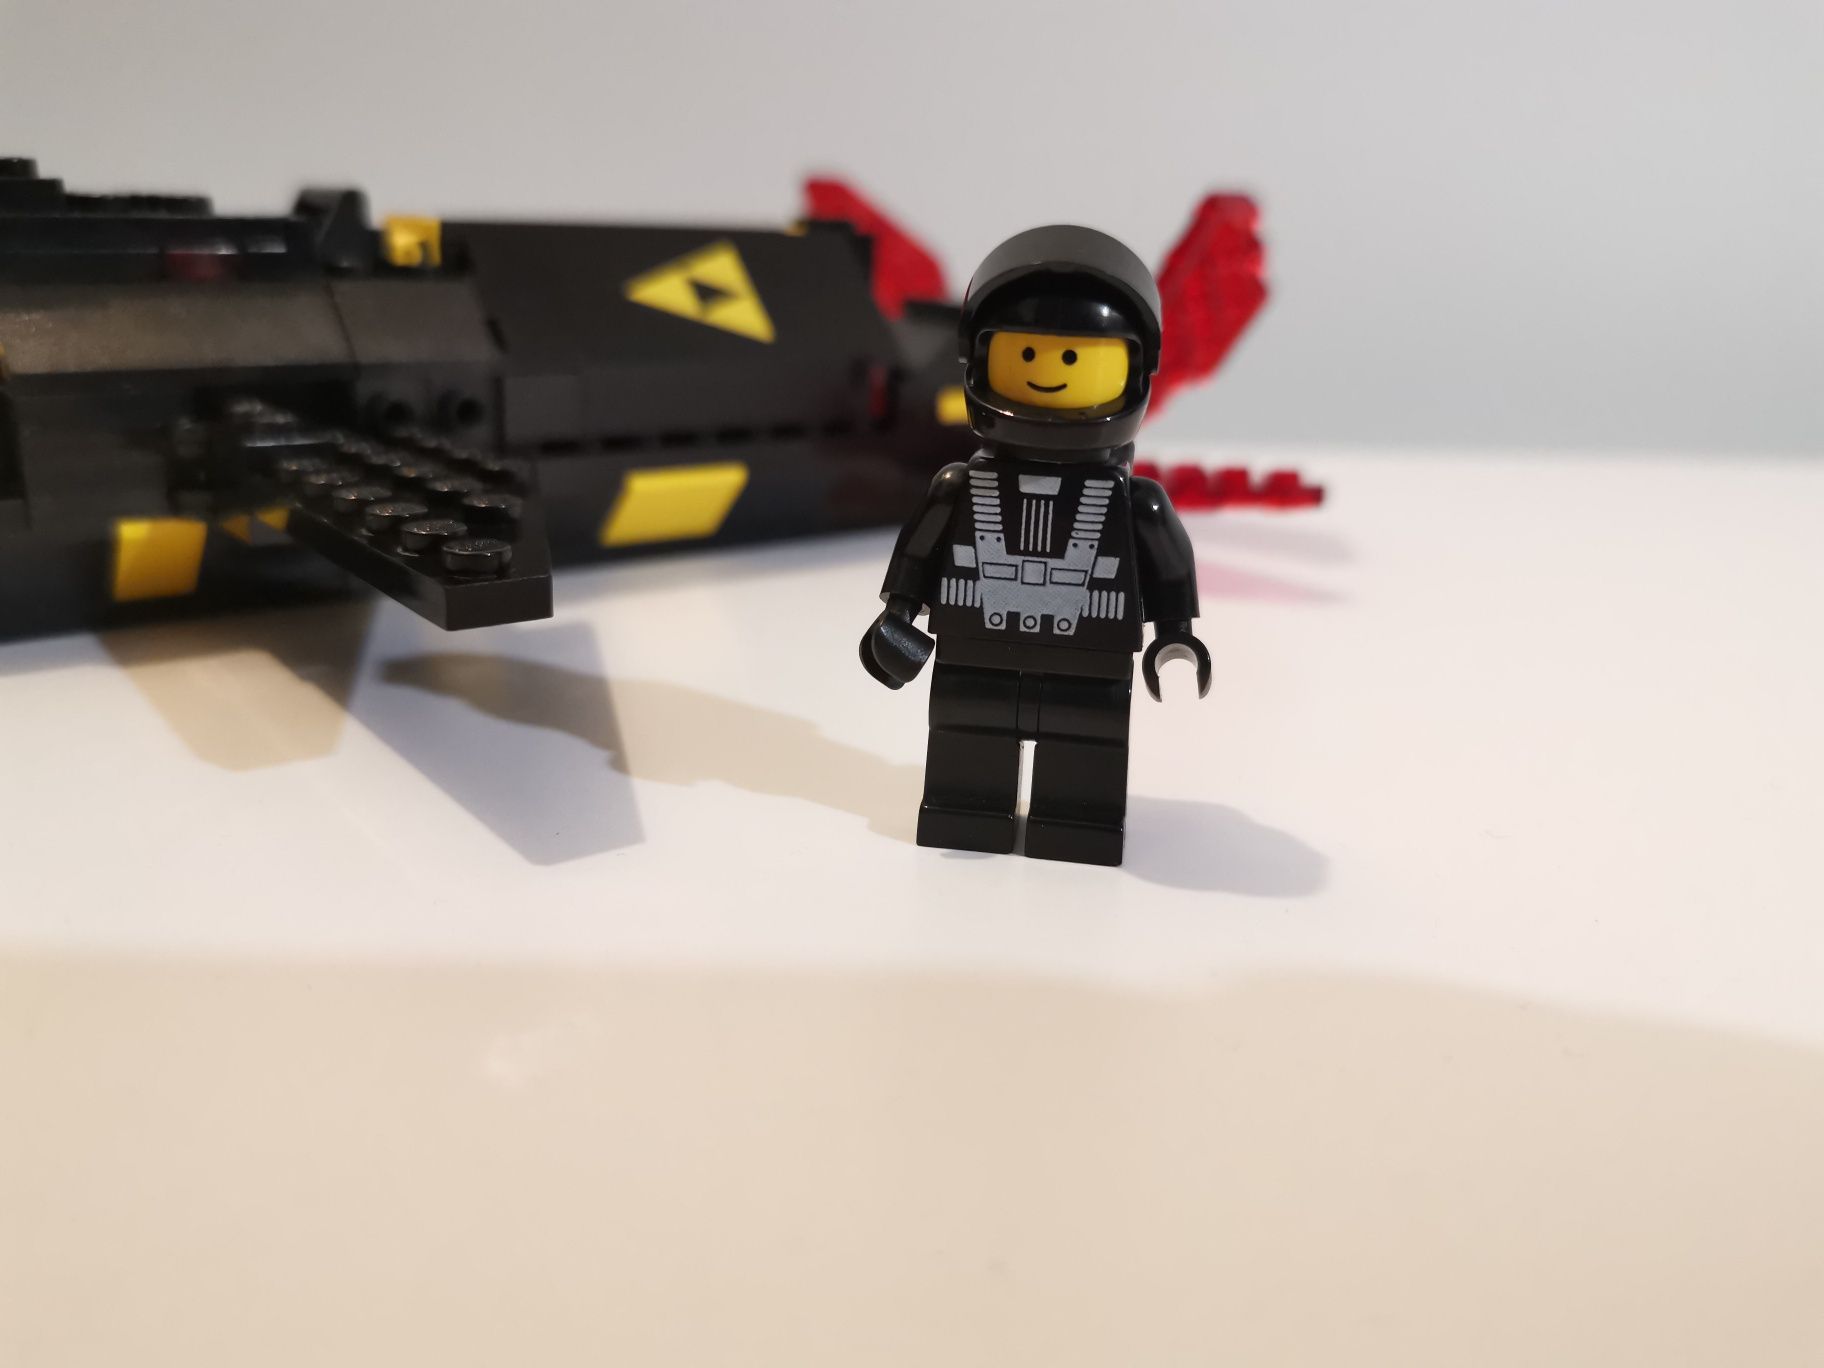 LEGO Space 6894 Blacktron Invader